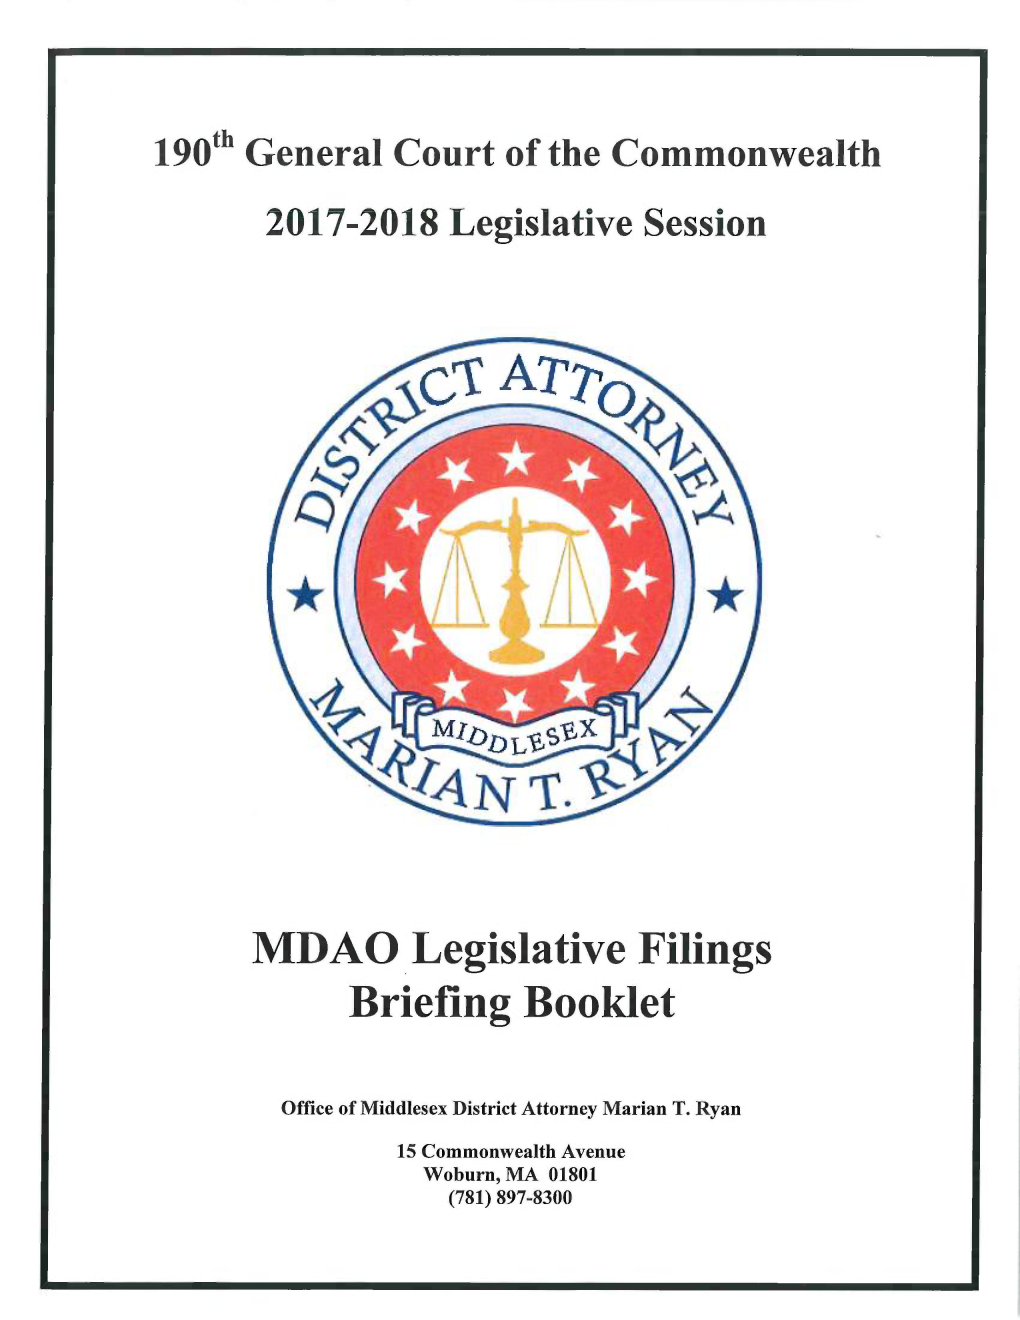 MDAO Legislative Filings Briefing Booklet